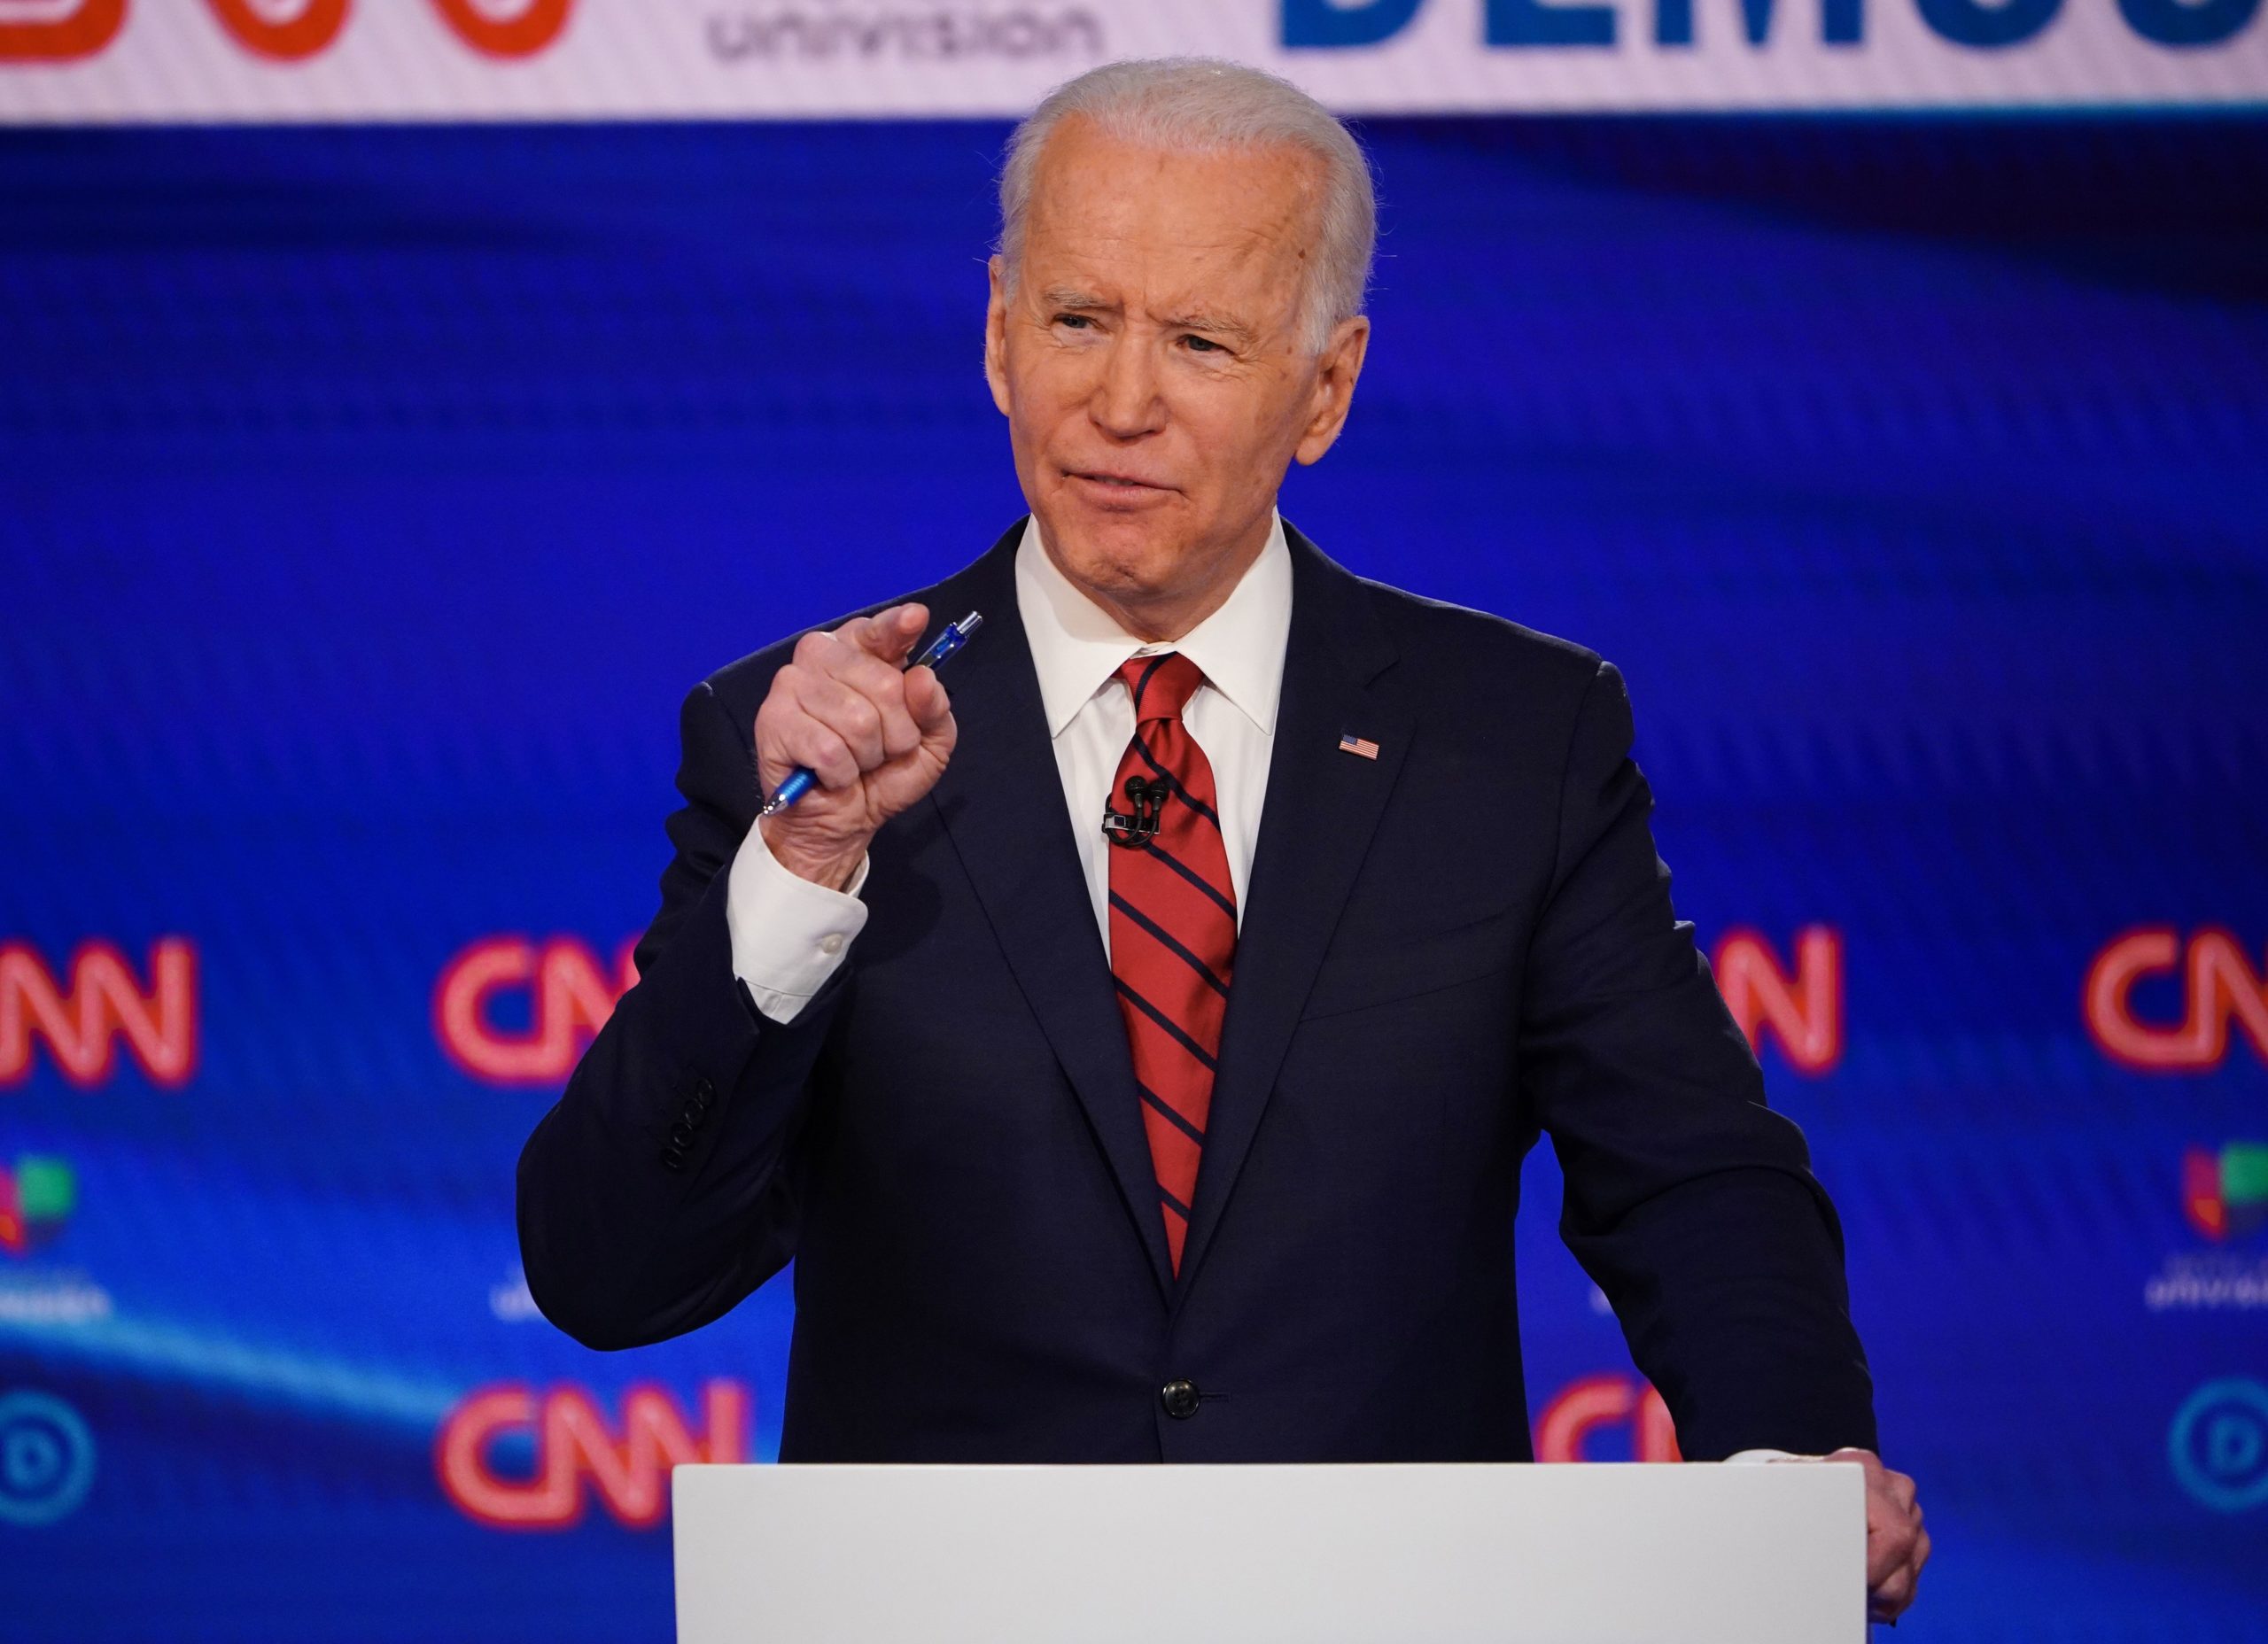 Joe Biden Responds To Sexual Assault Allegation